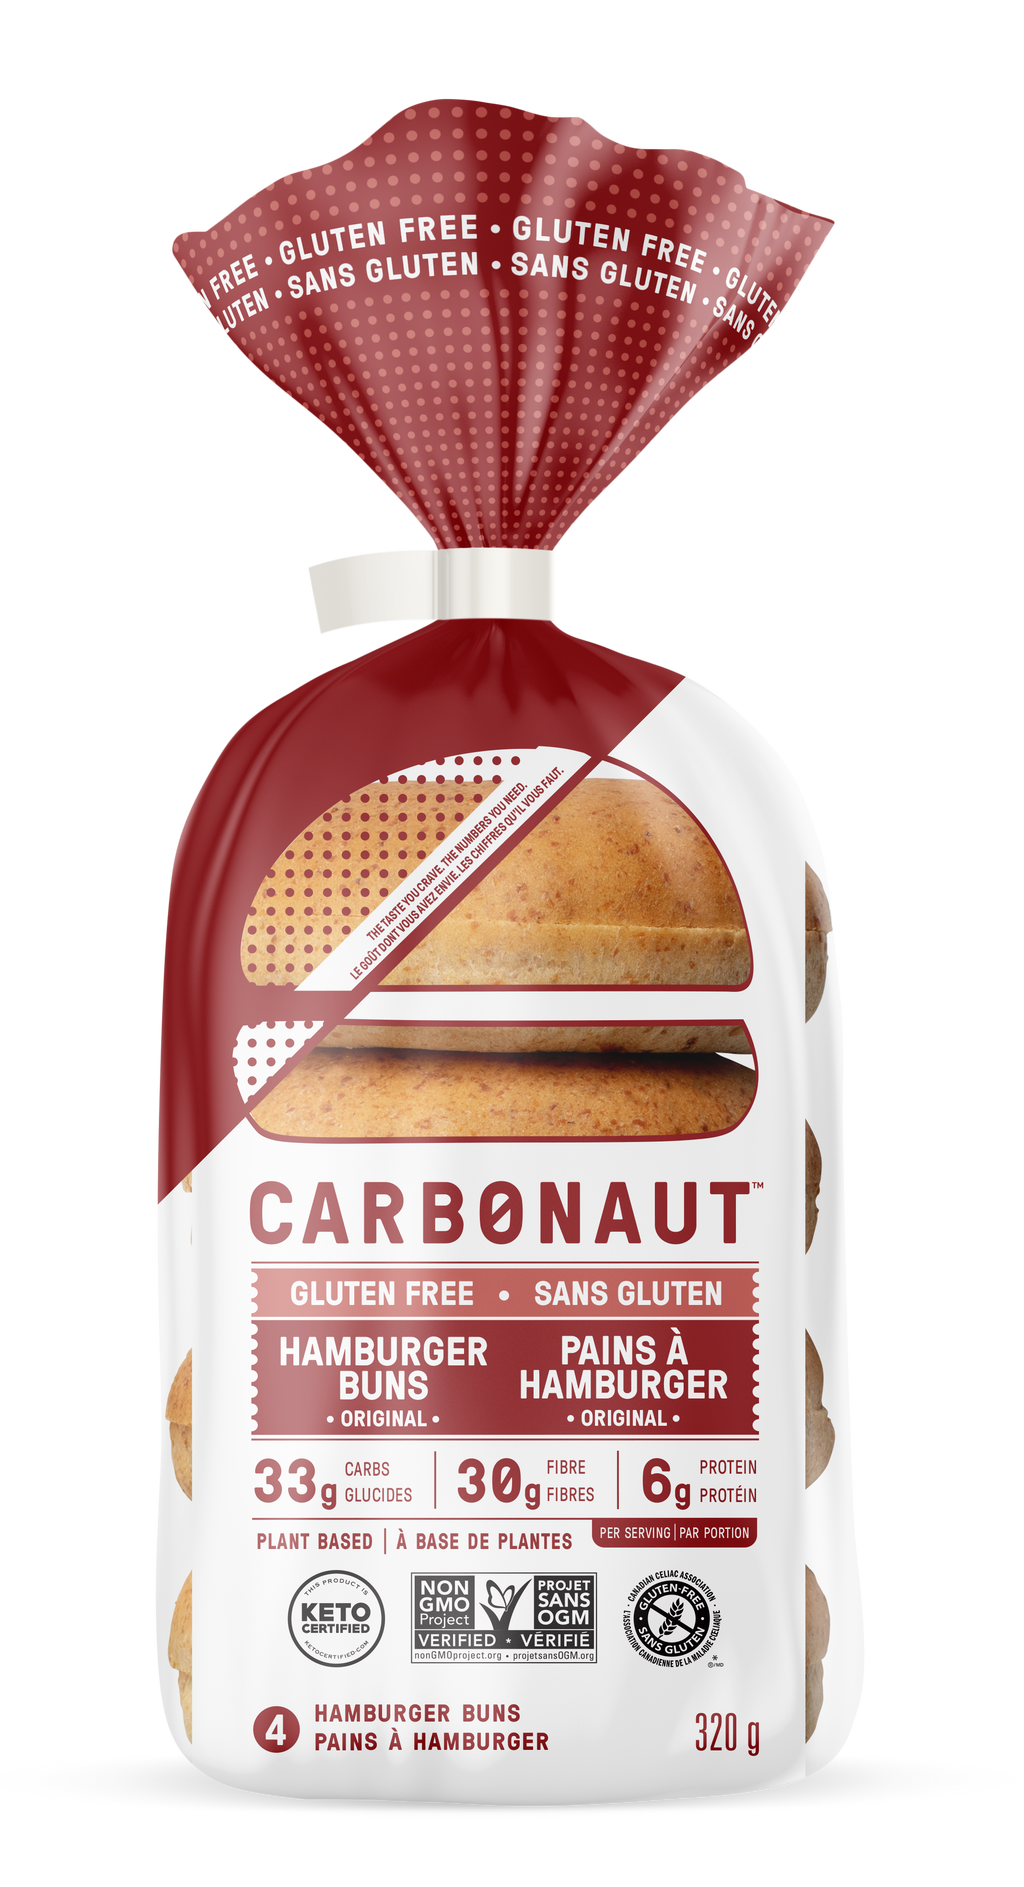 Carbonaut Gluten-Free Hamburger Buns